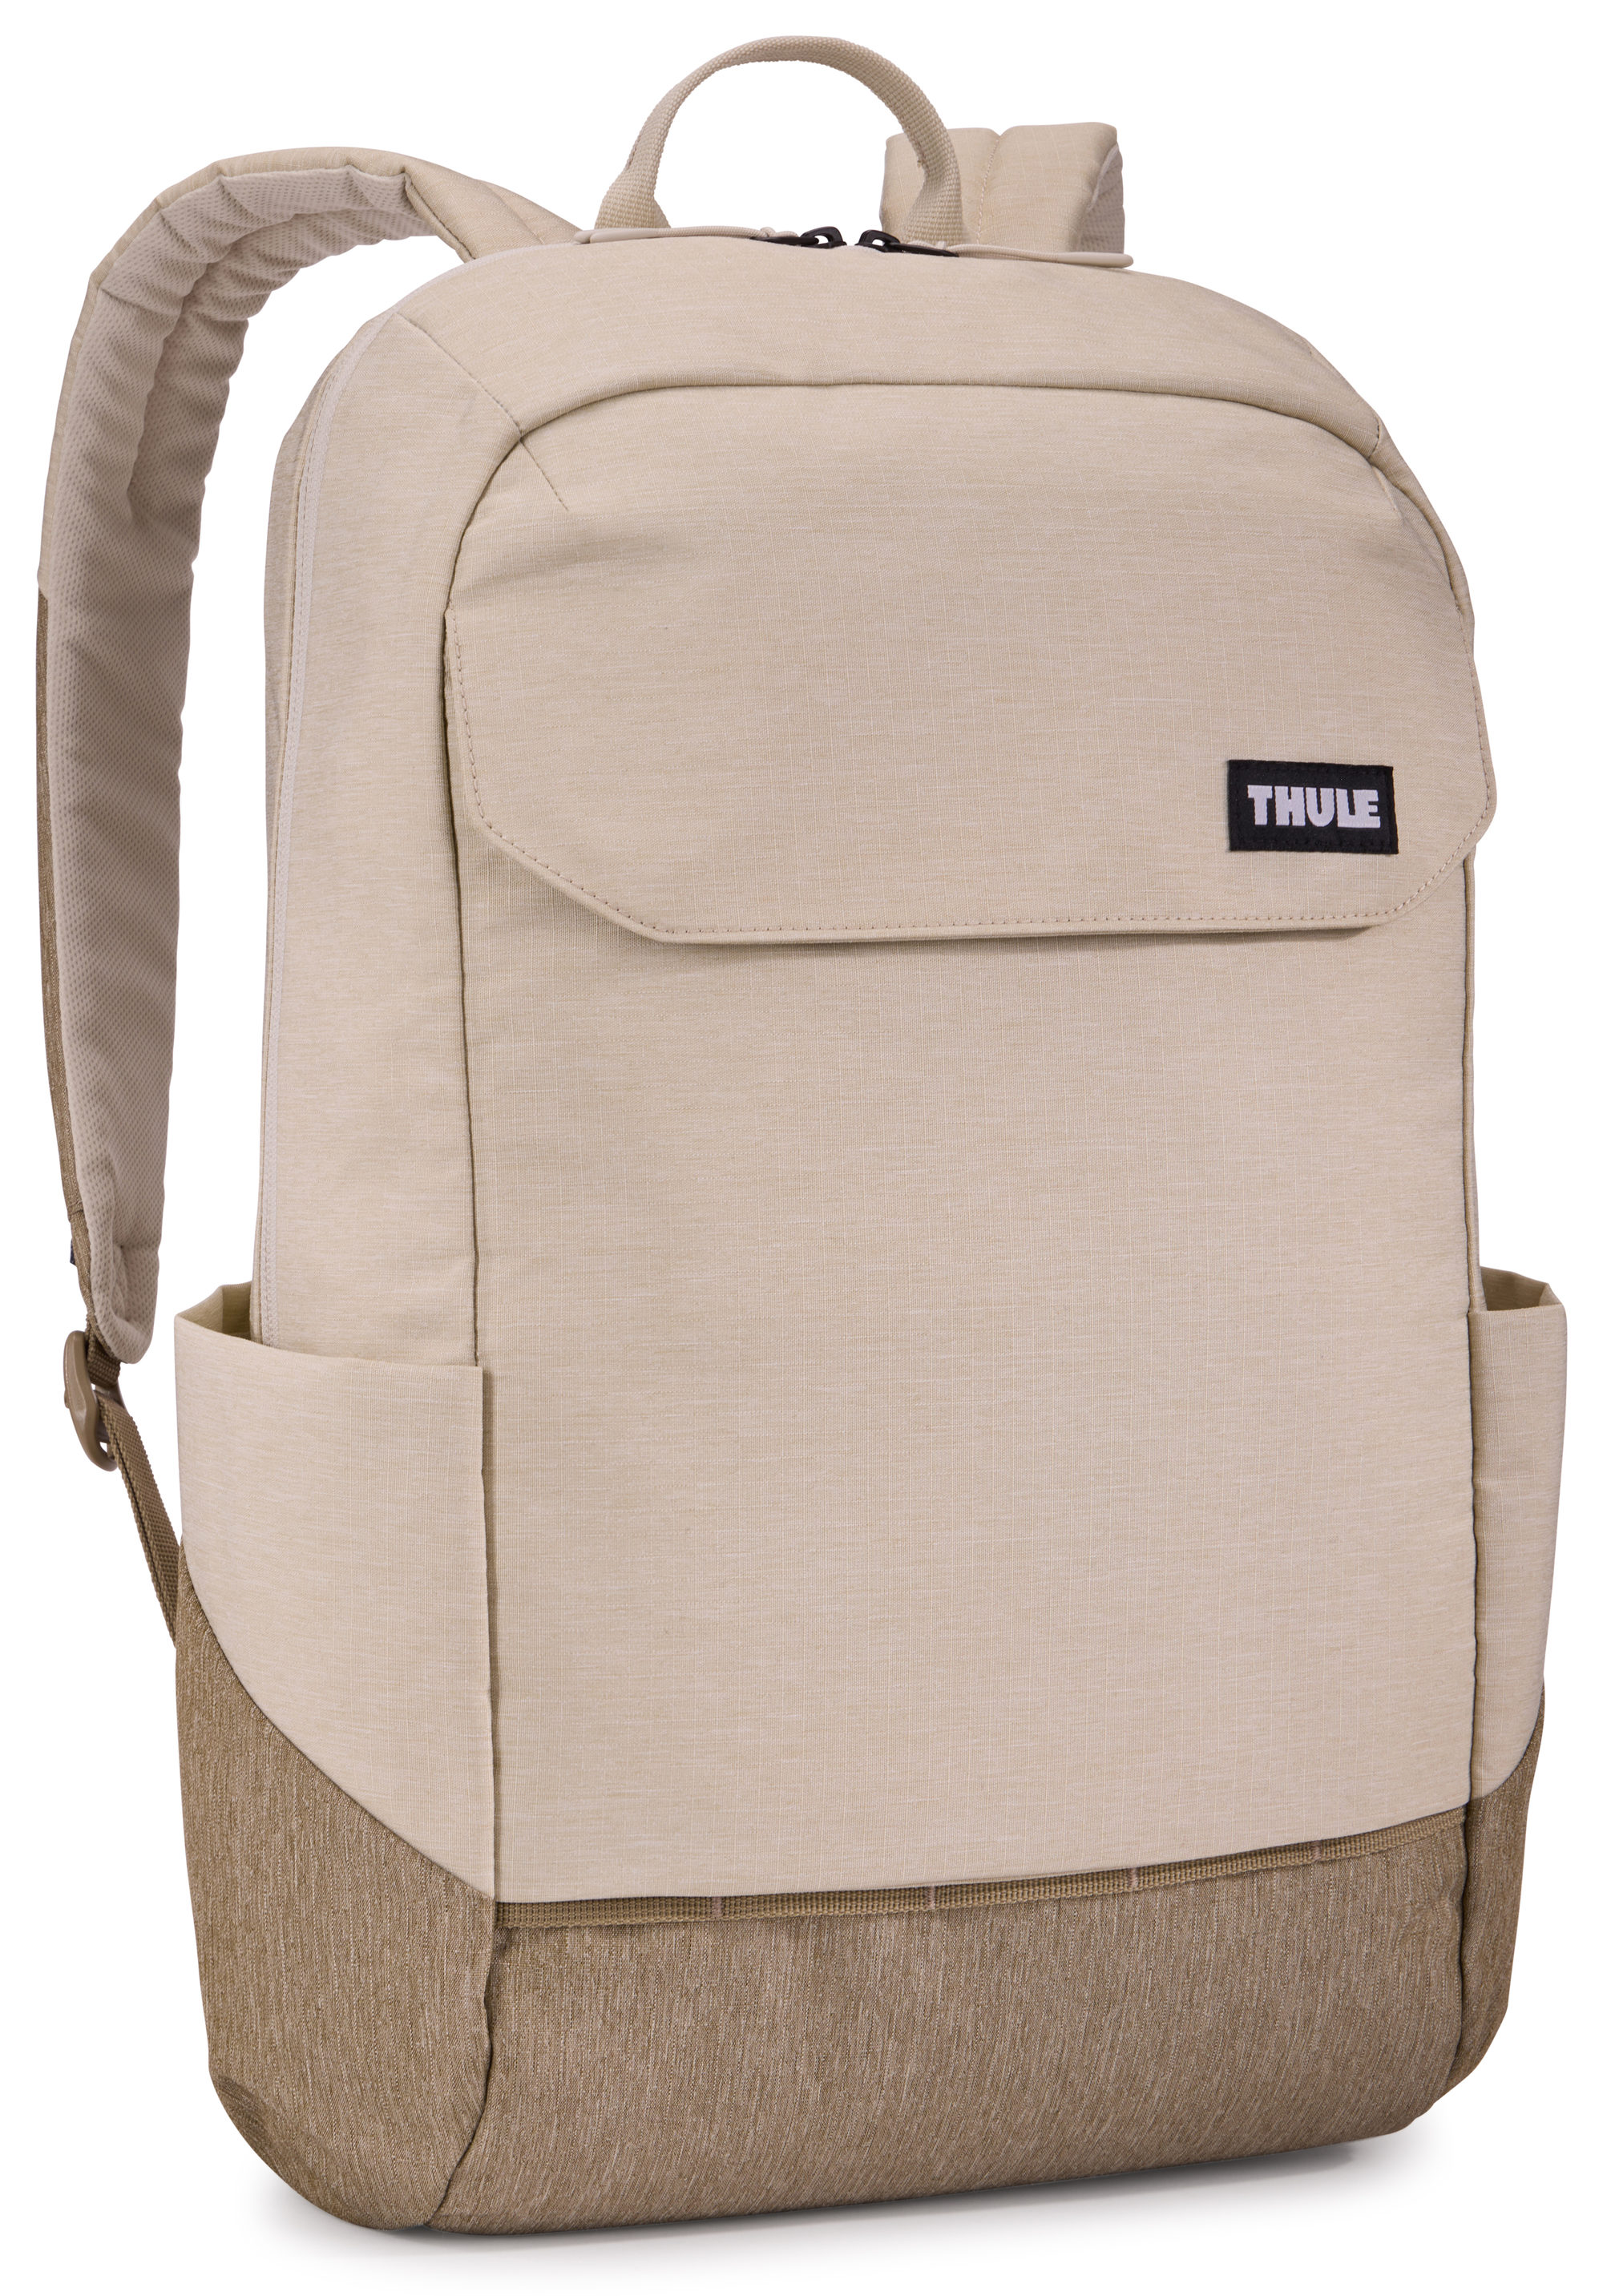 Thule Lithos Backpack 20L  in Beige (20 Liter), Rucksack / Backpack